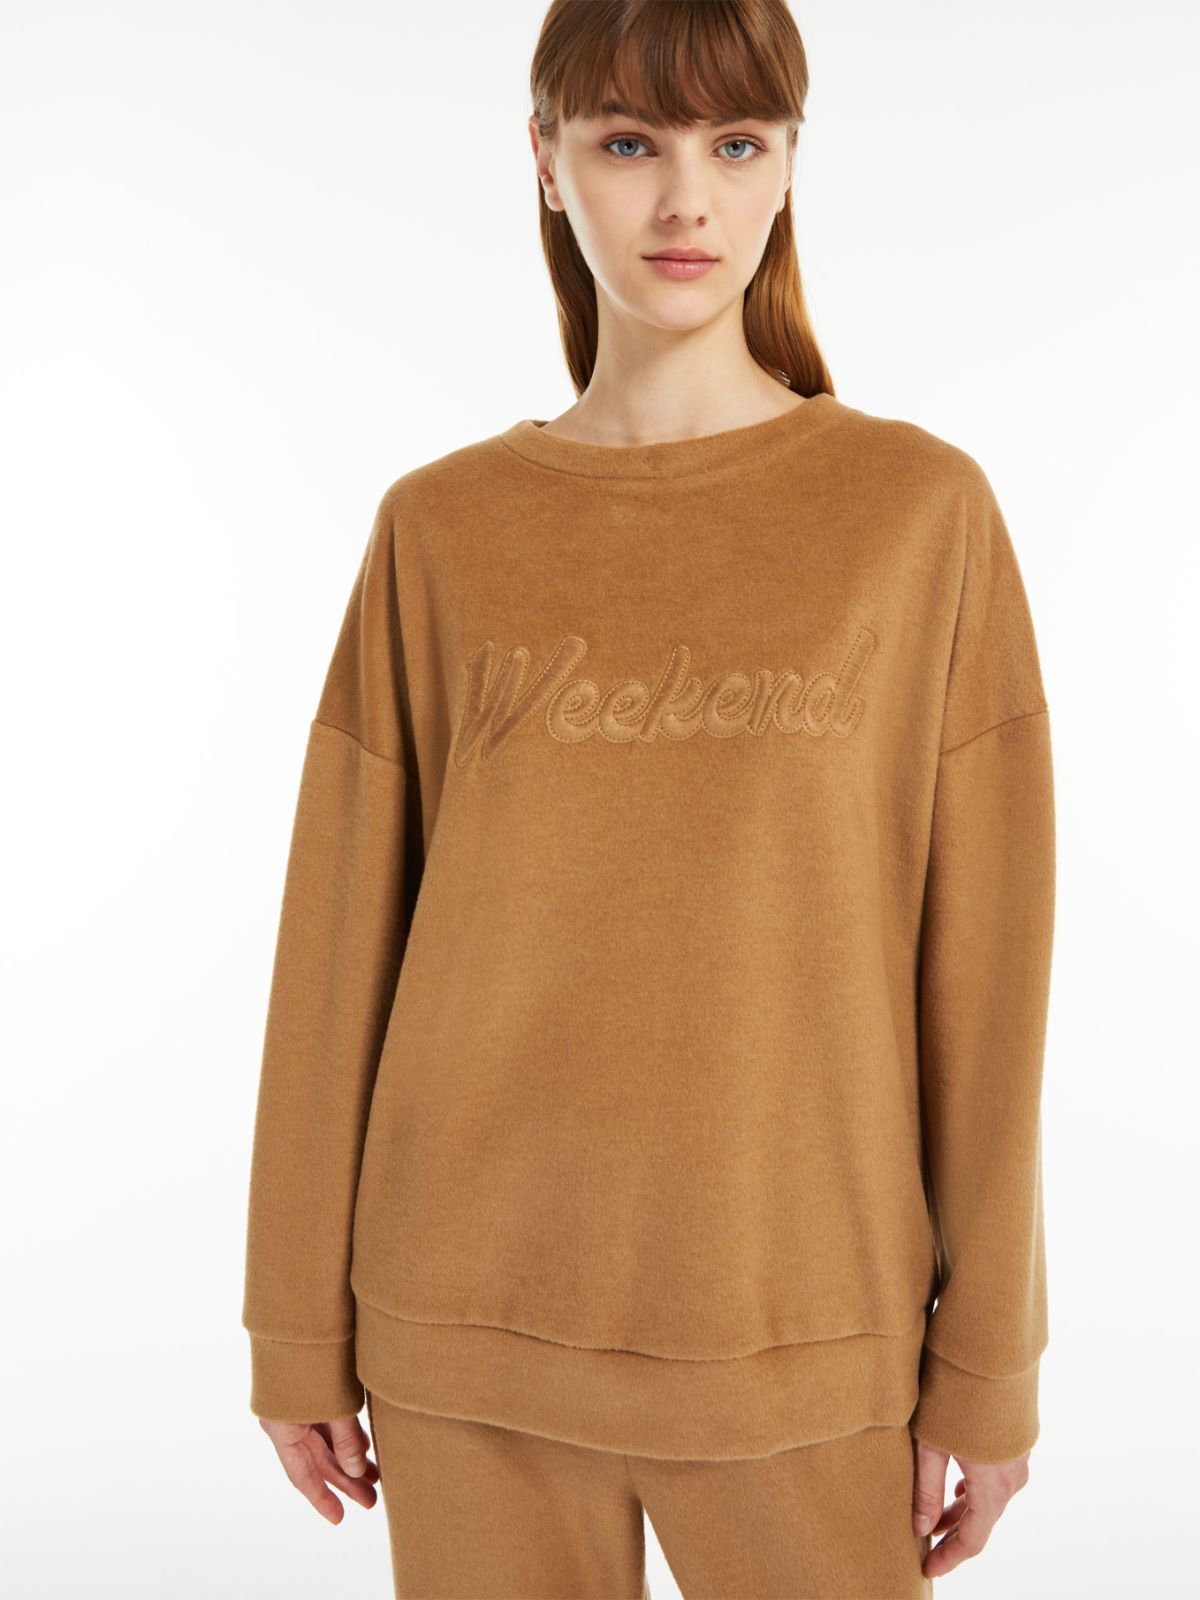 Cotton jersey sweatshirt, Max Weekend | Mara camel